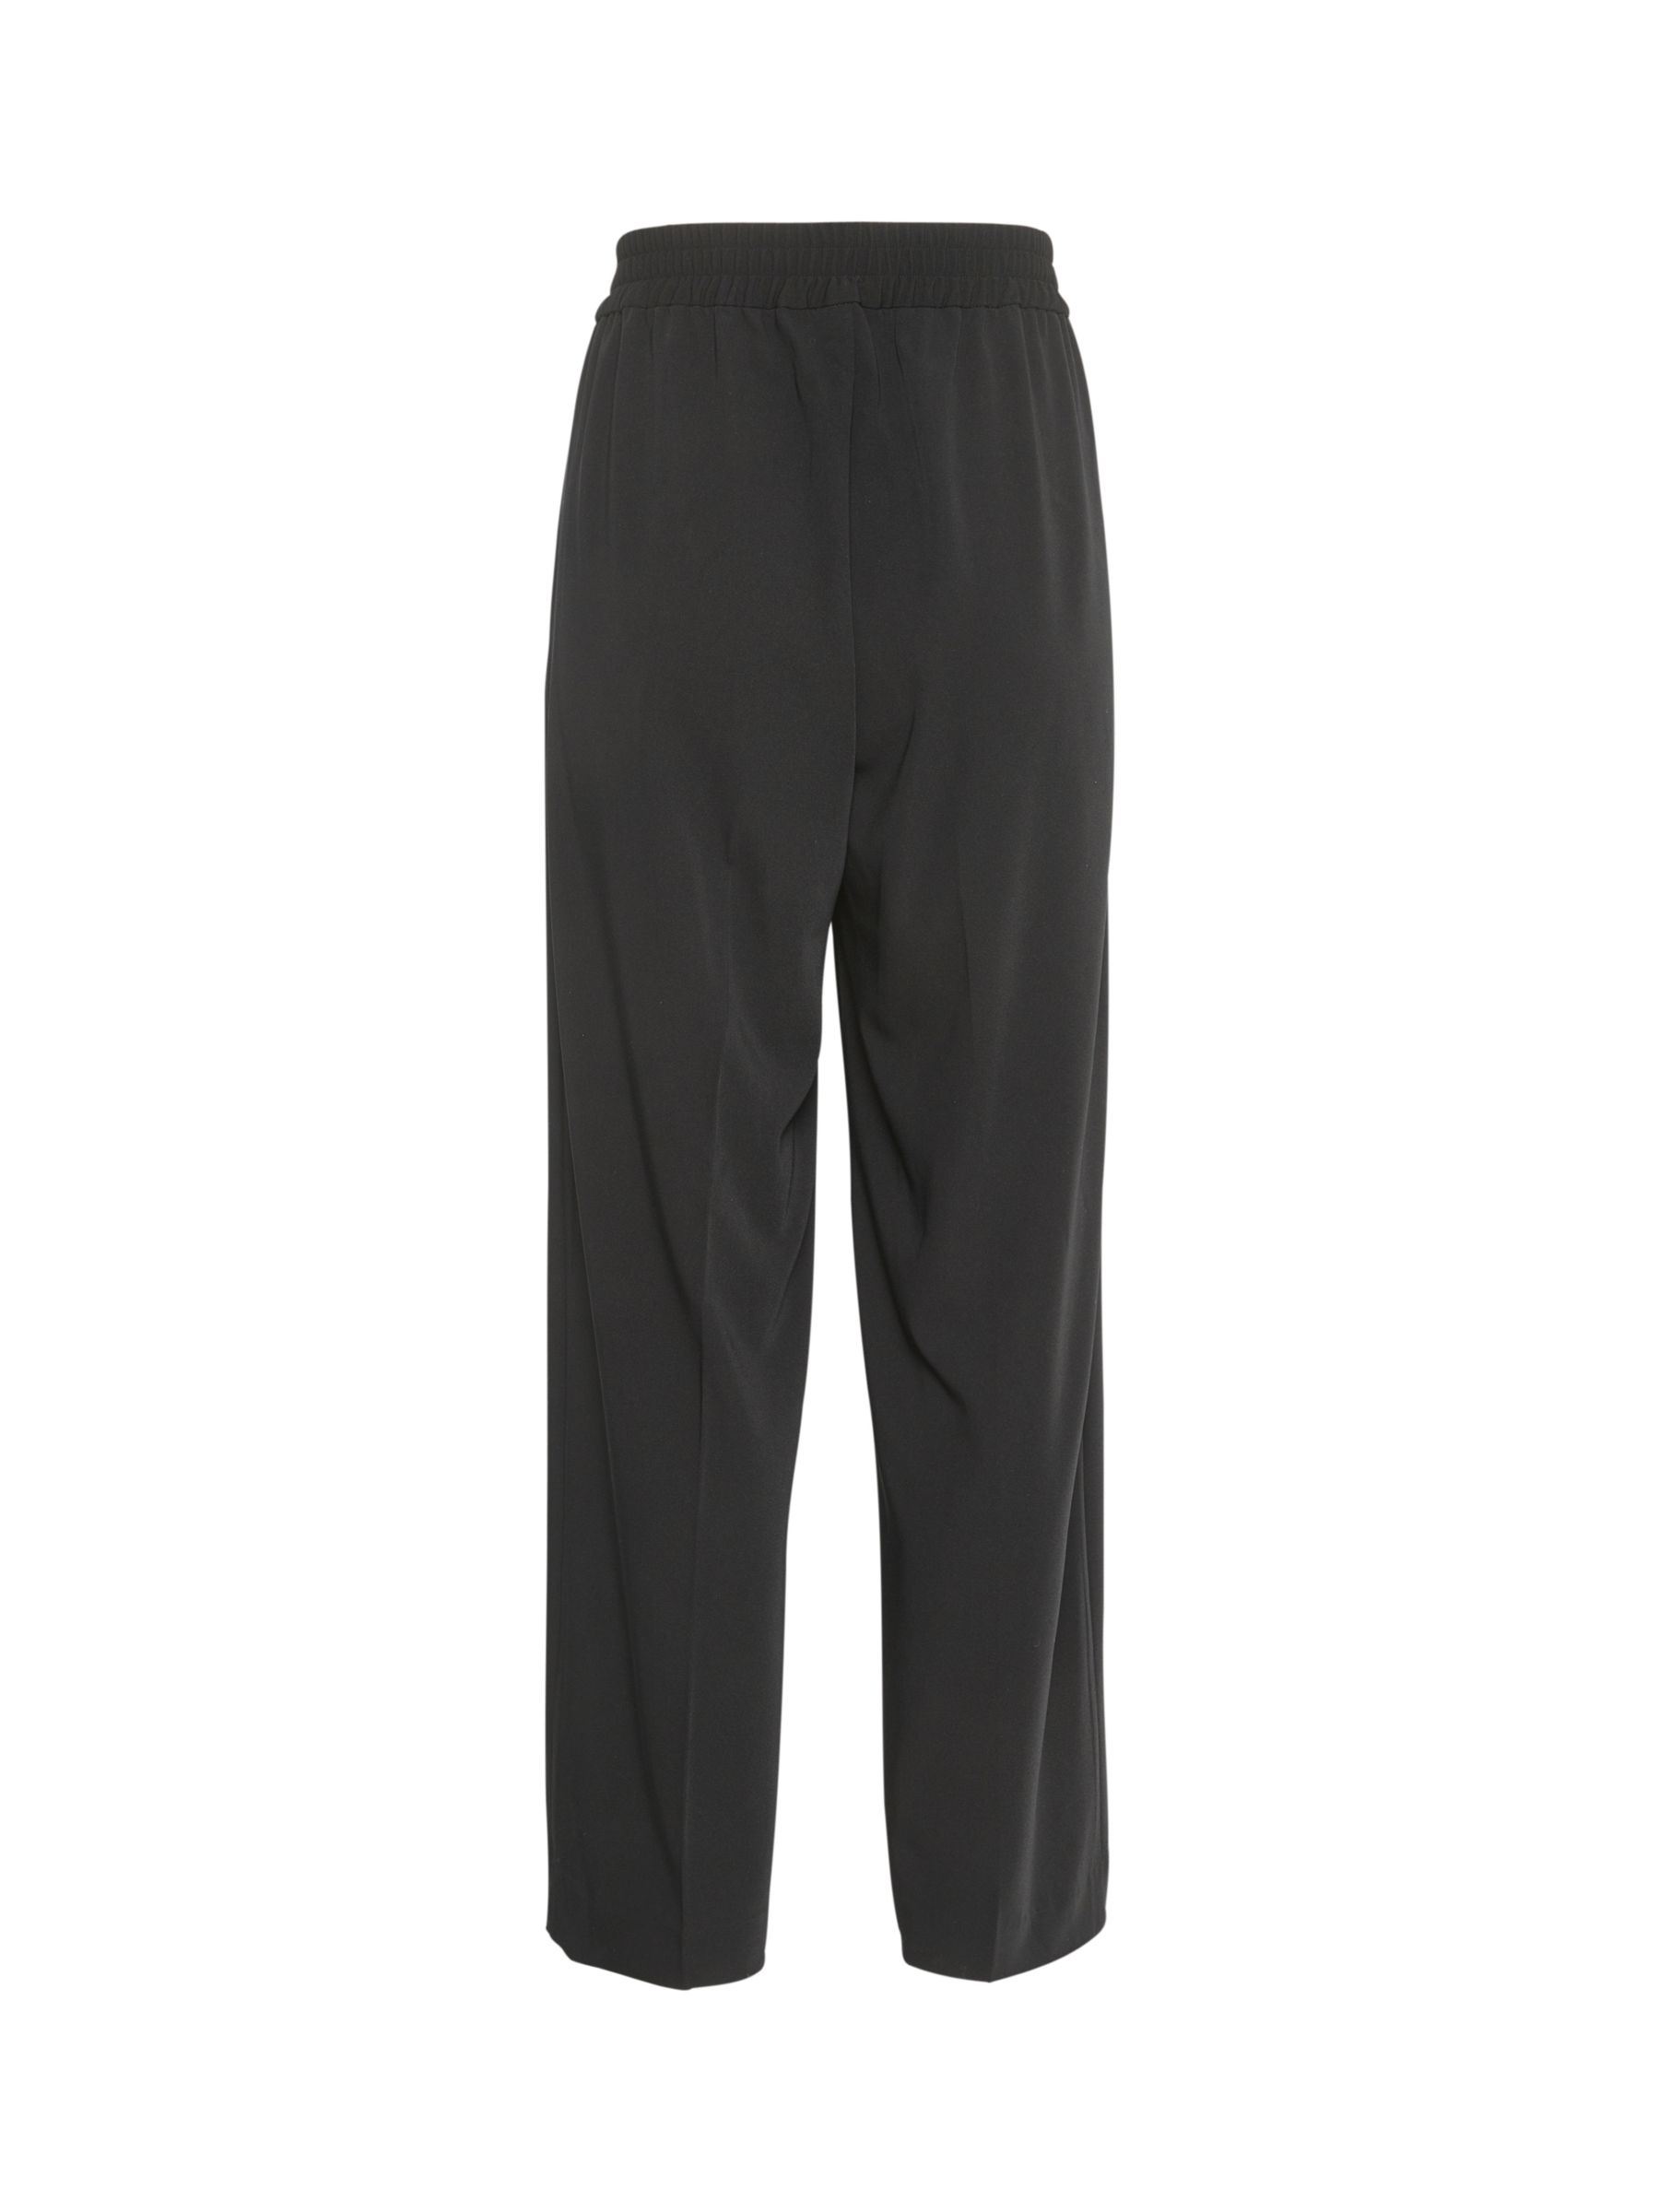 Buy InWear Adian Elastic Waist Casual Trousers, Black Online at johnlewis.com